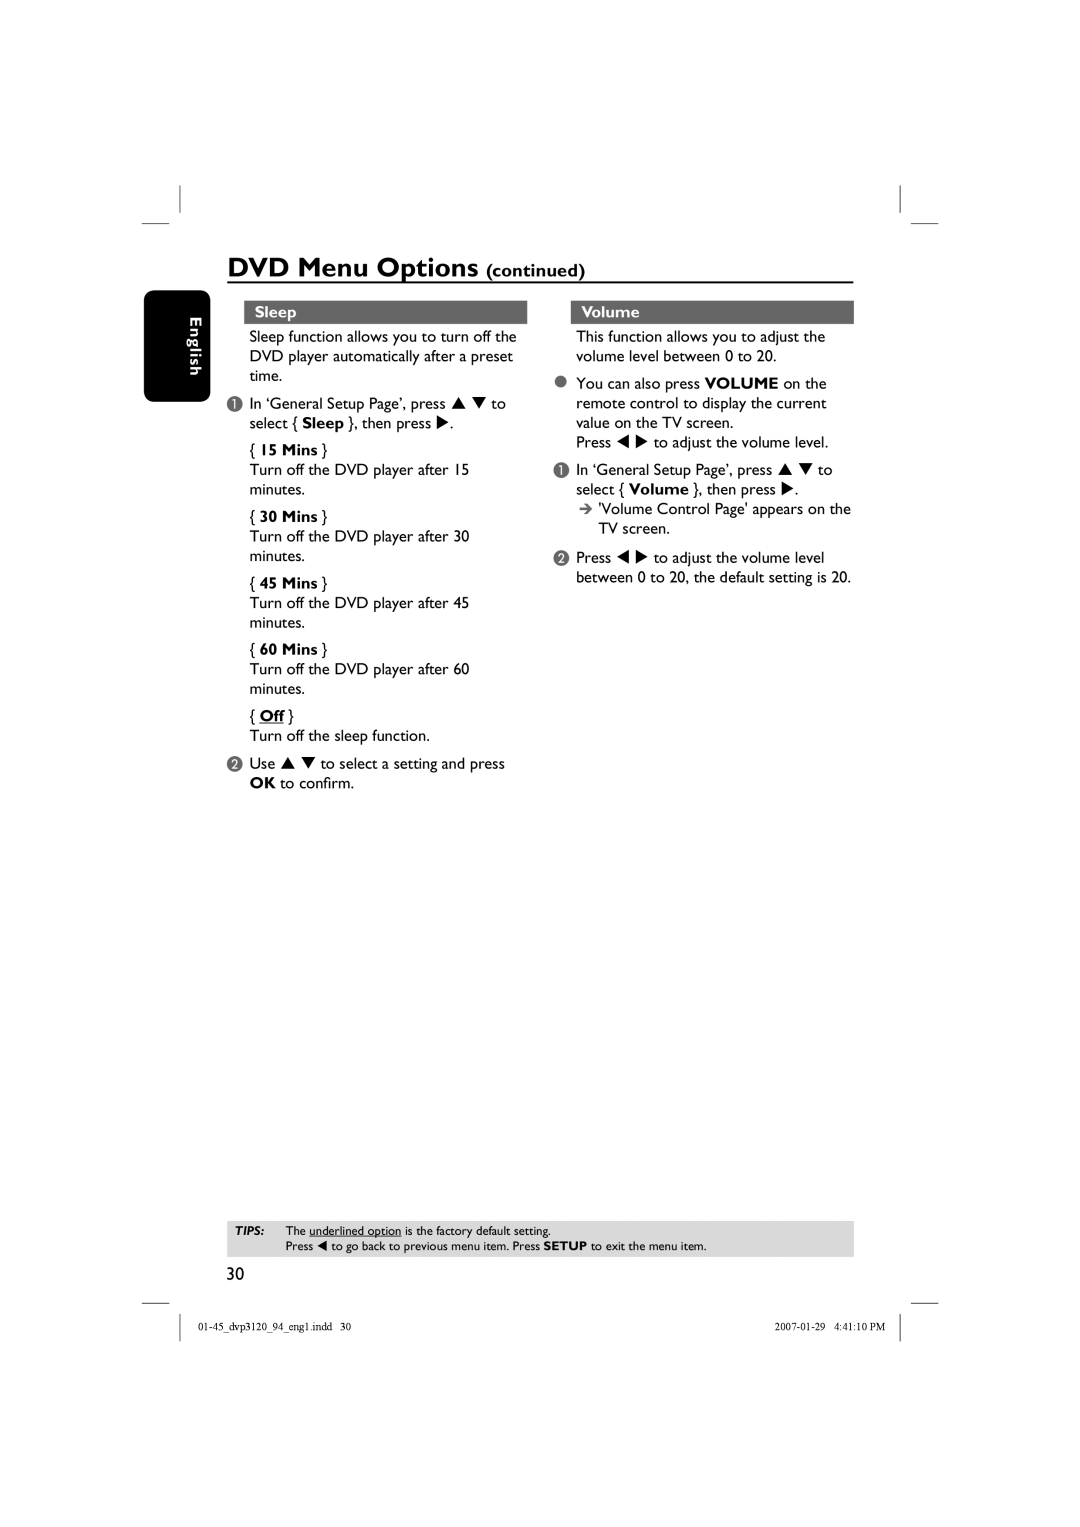 Philips DVP3721X/94 user manual DVD Menu Options continued, Sleep, Volume, Mins, English 